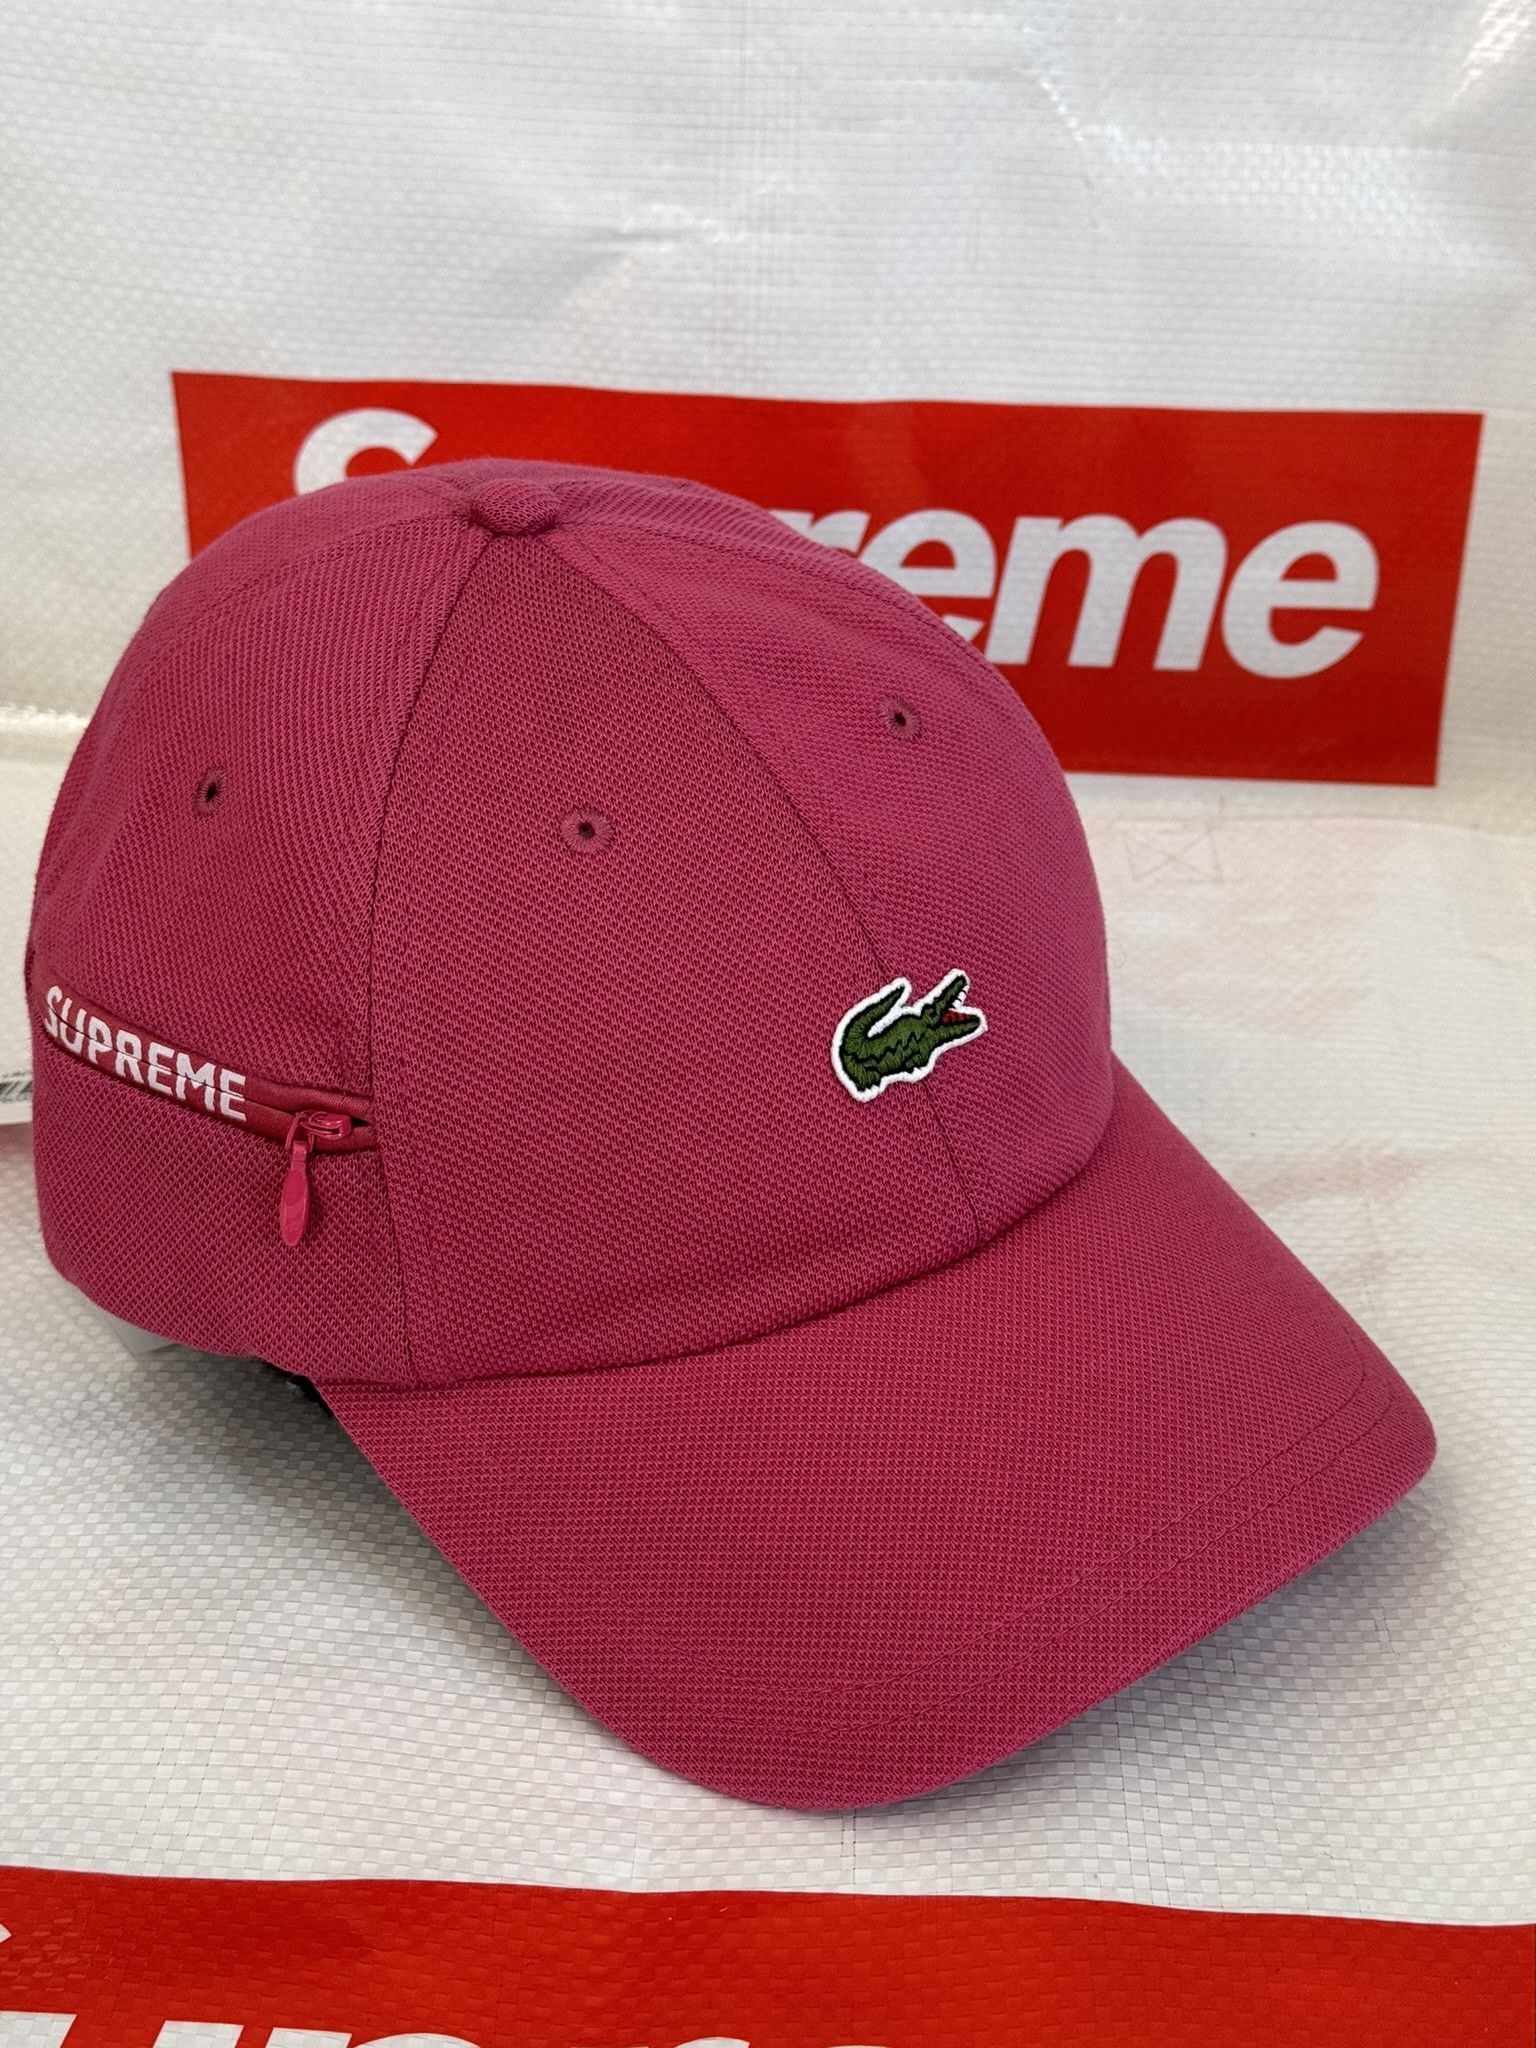 Supreme Supreme LACOSTE Pique 6-Panel Pink cap hat | Grailed